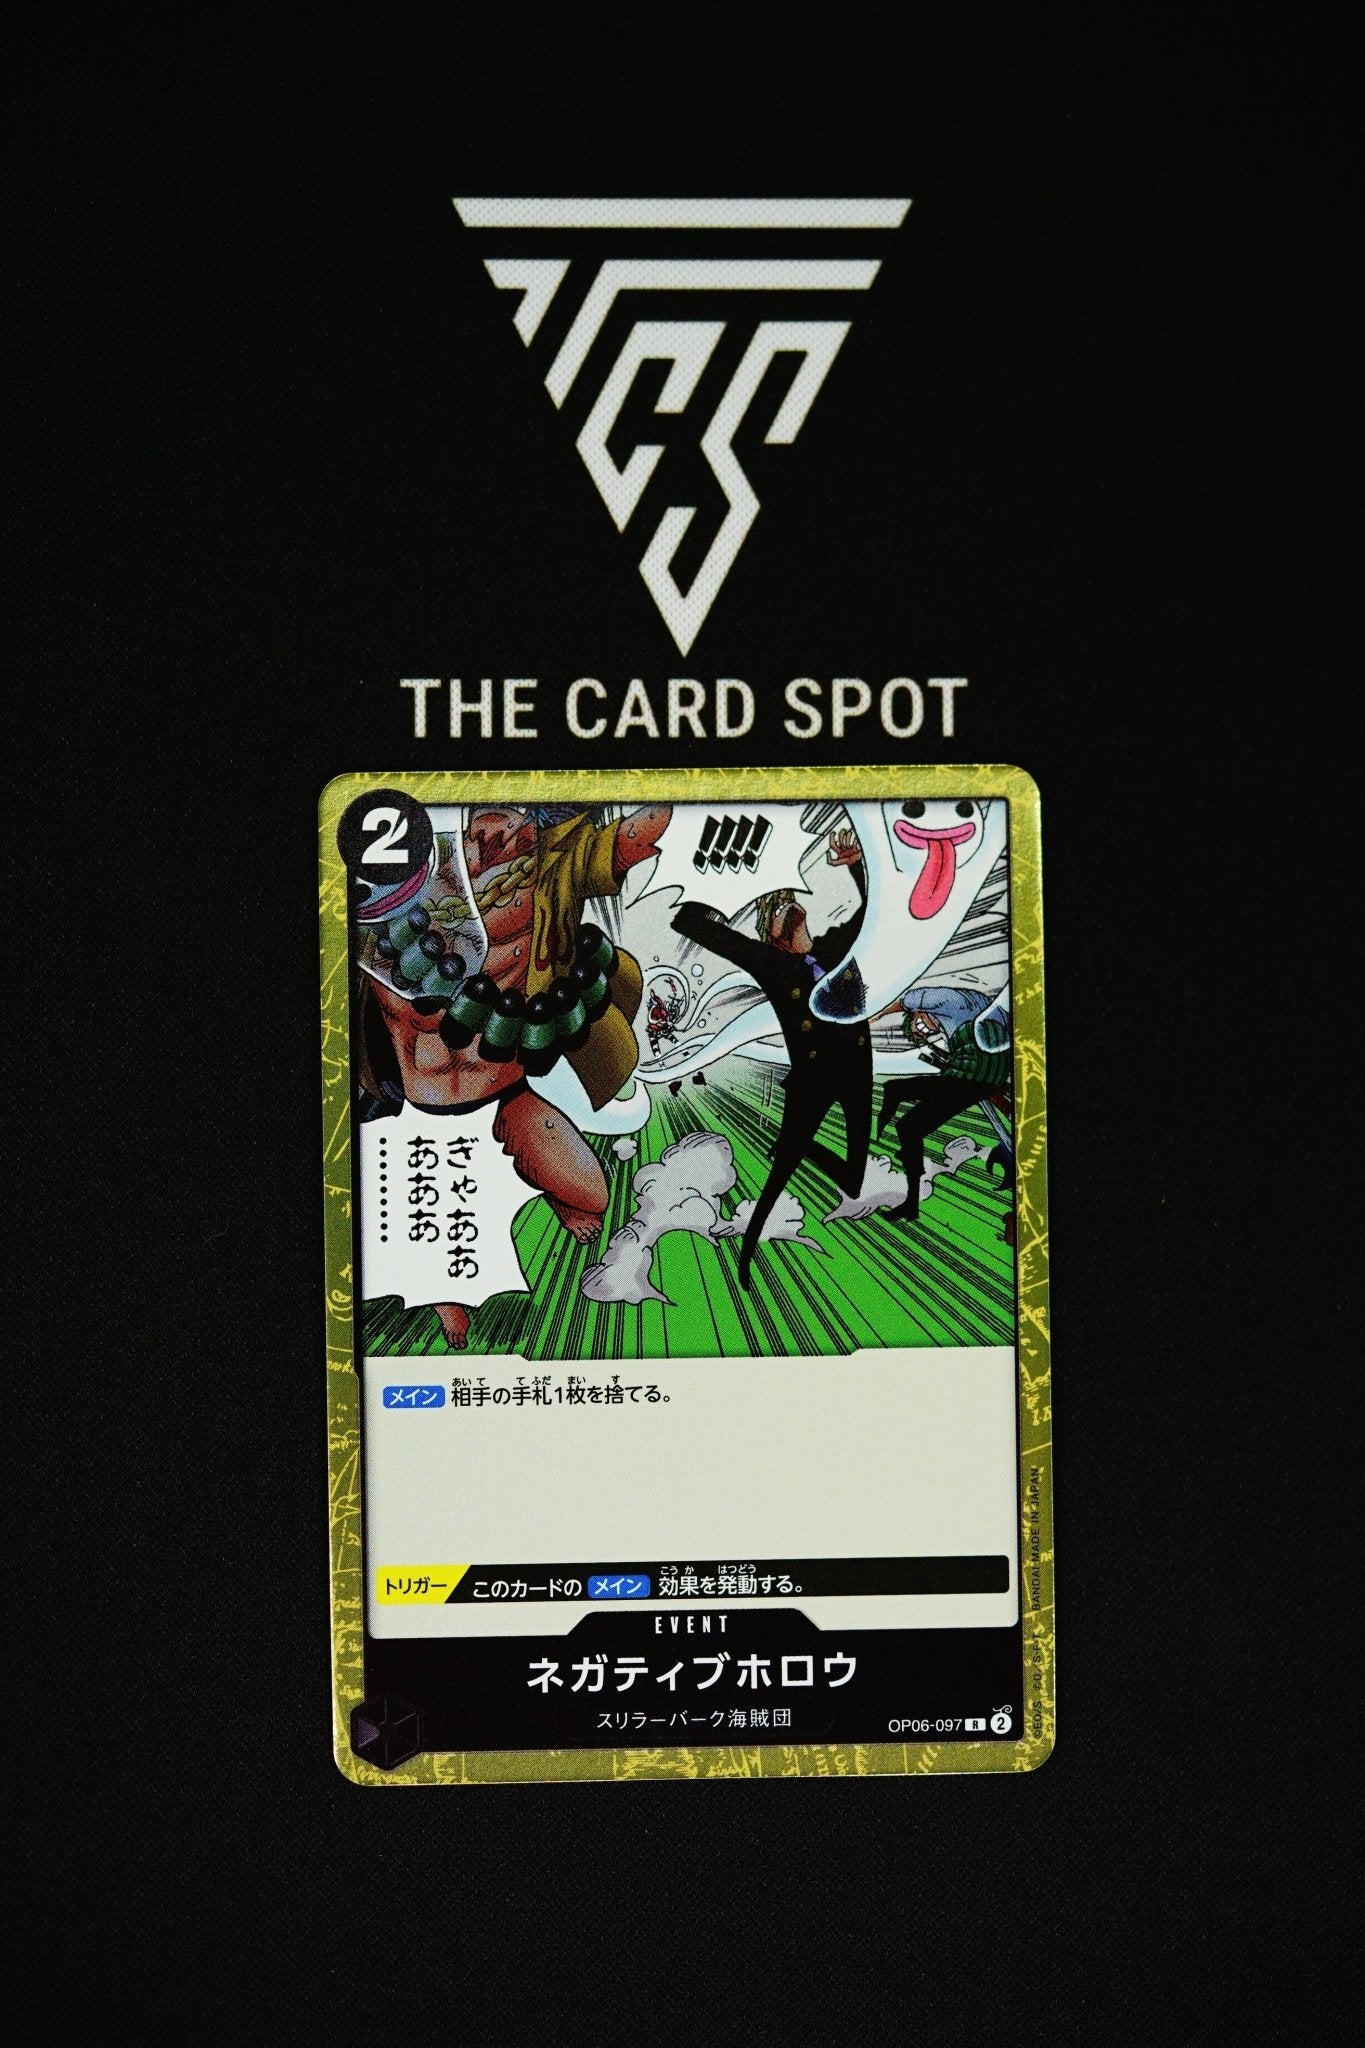 OP06-097 R Negative Hollow - One Piece - THE CARD SPOT PTY LTD.One Piece CardsONE PIECE